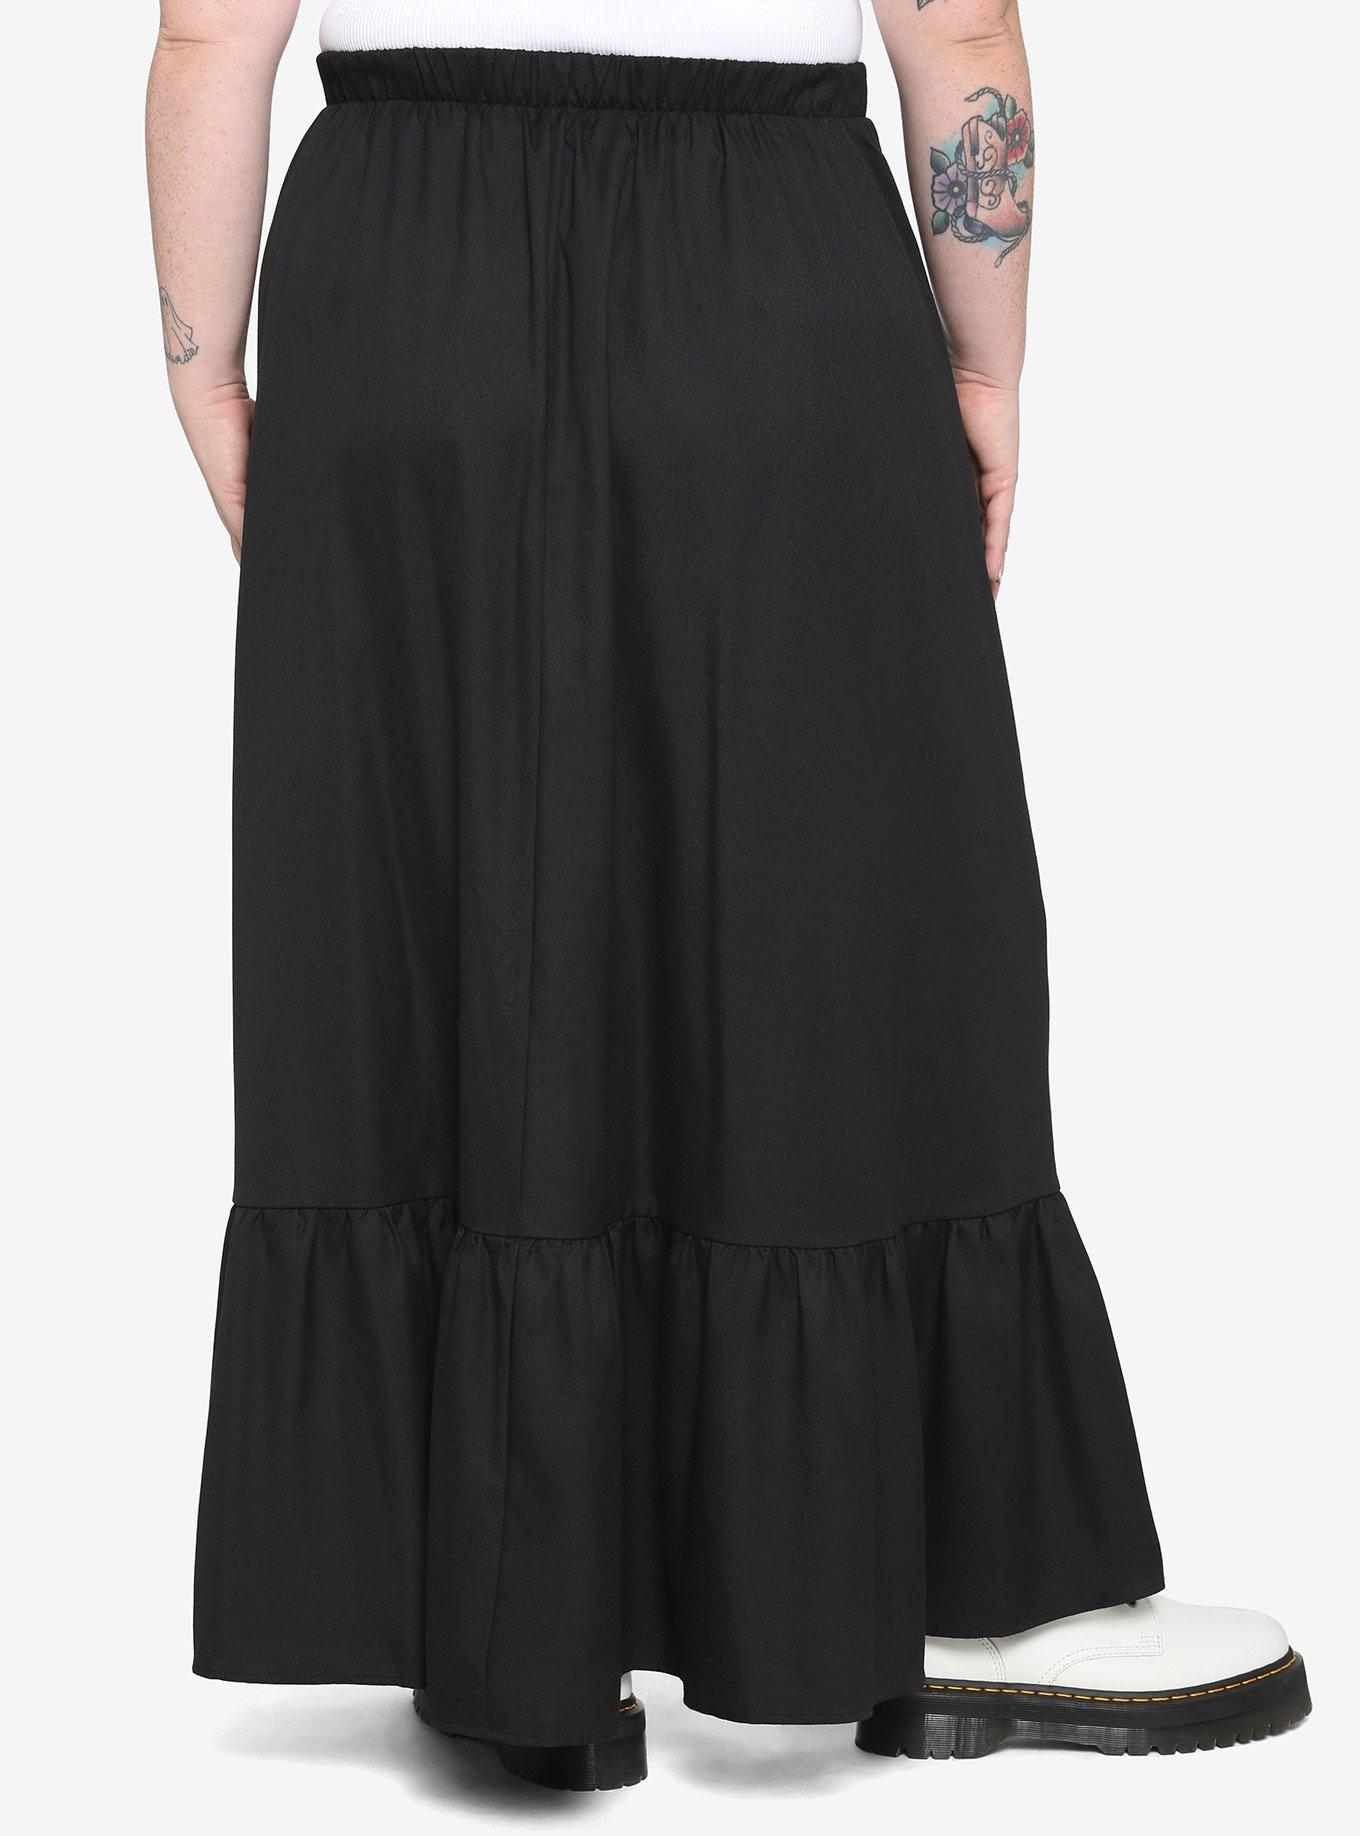 Black Bustle Maxi Skirt Plus Size, BLACK, alternate